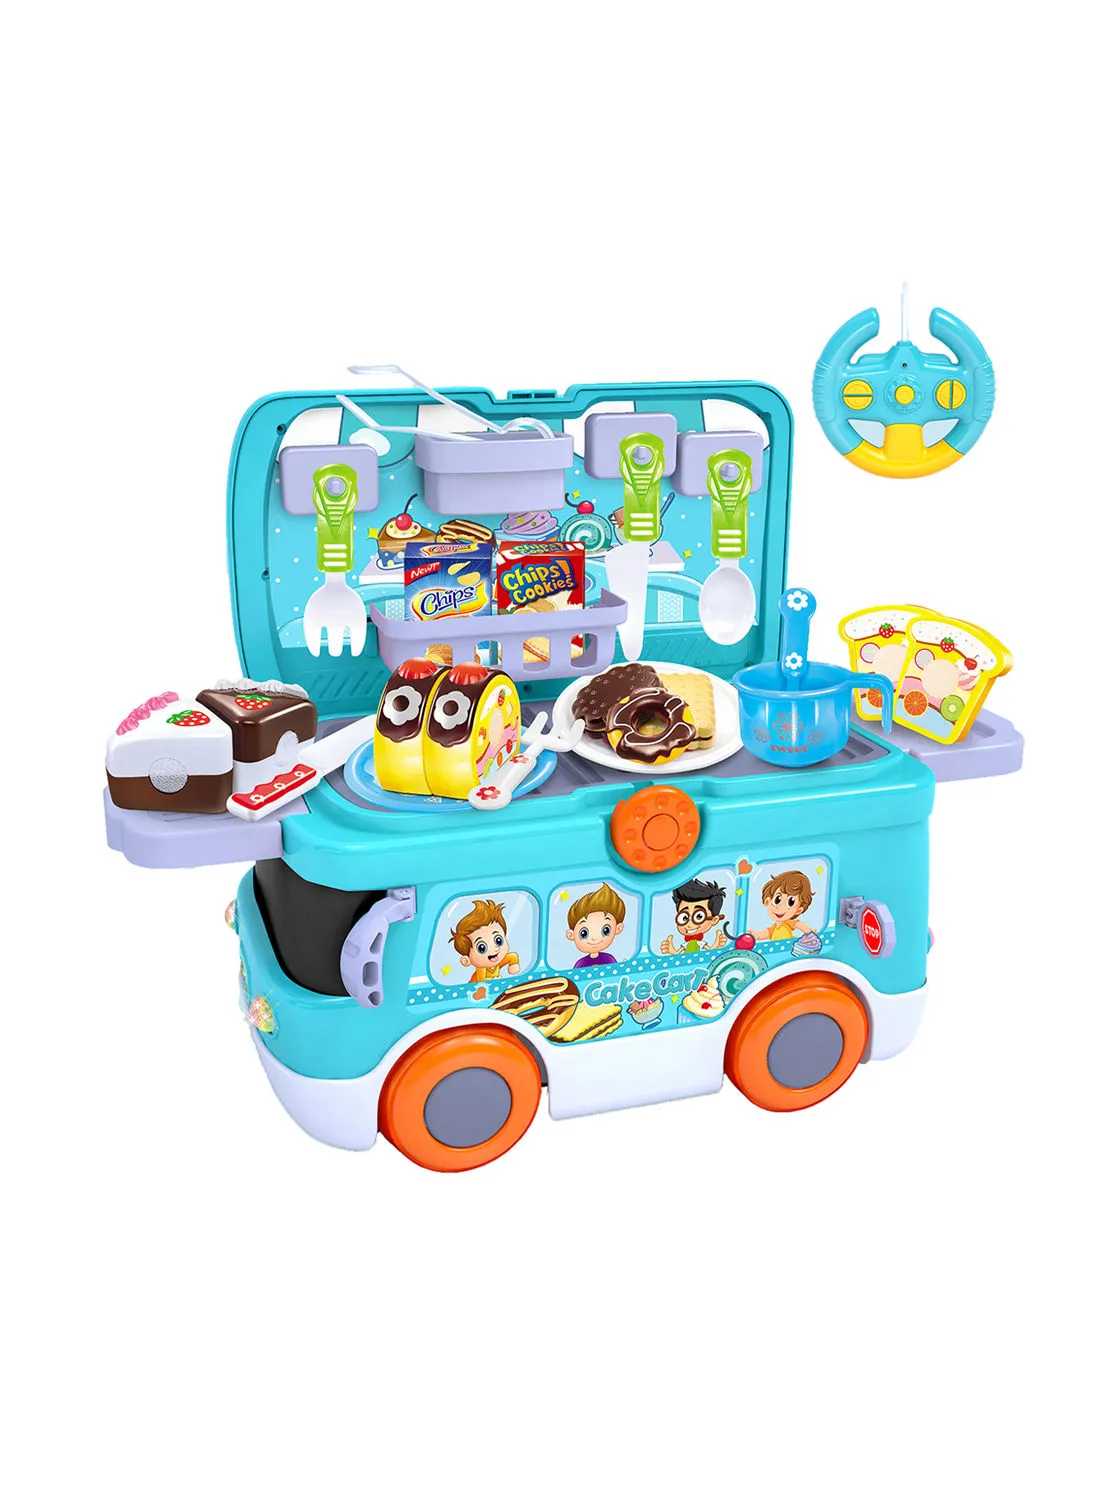 Hong Chuan Sheng Toys Cake Cart Kitchen Set